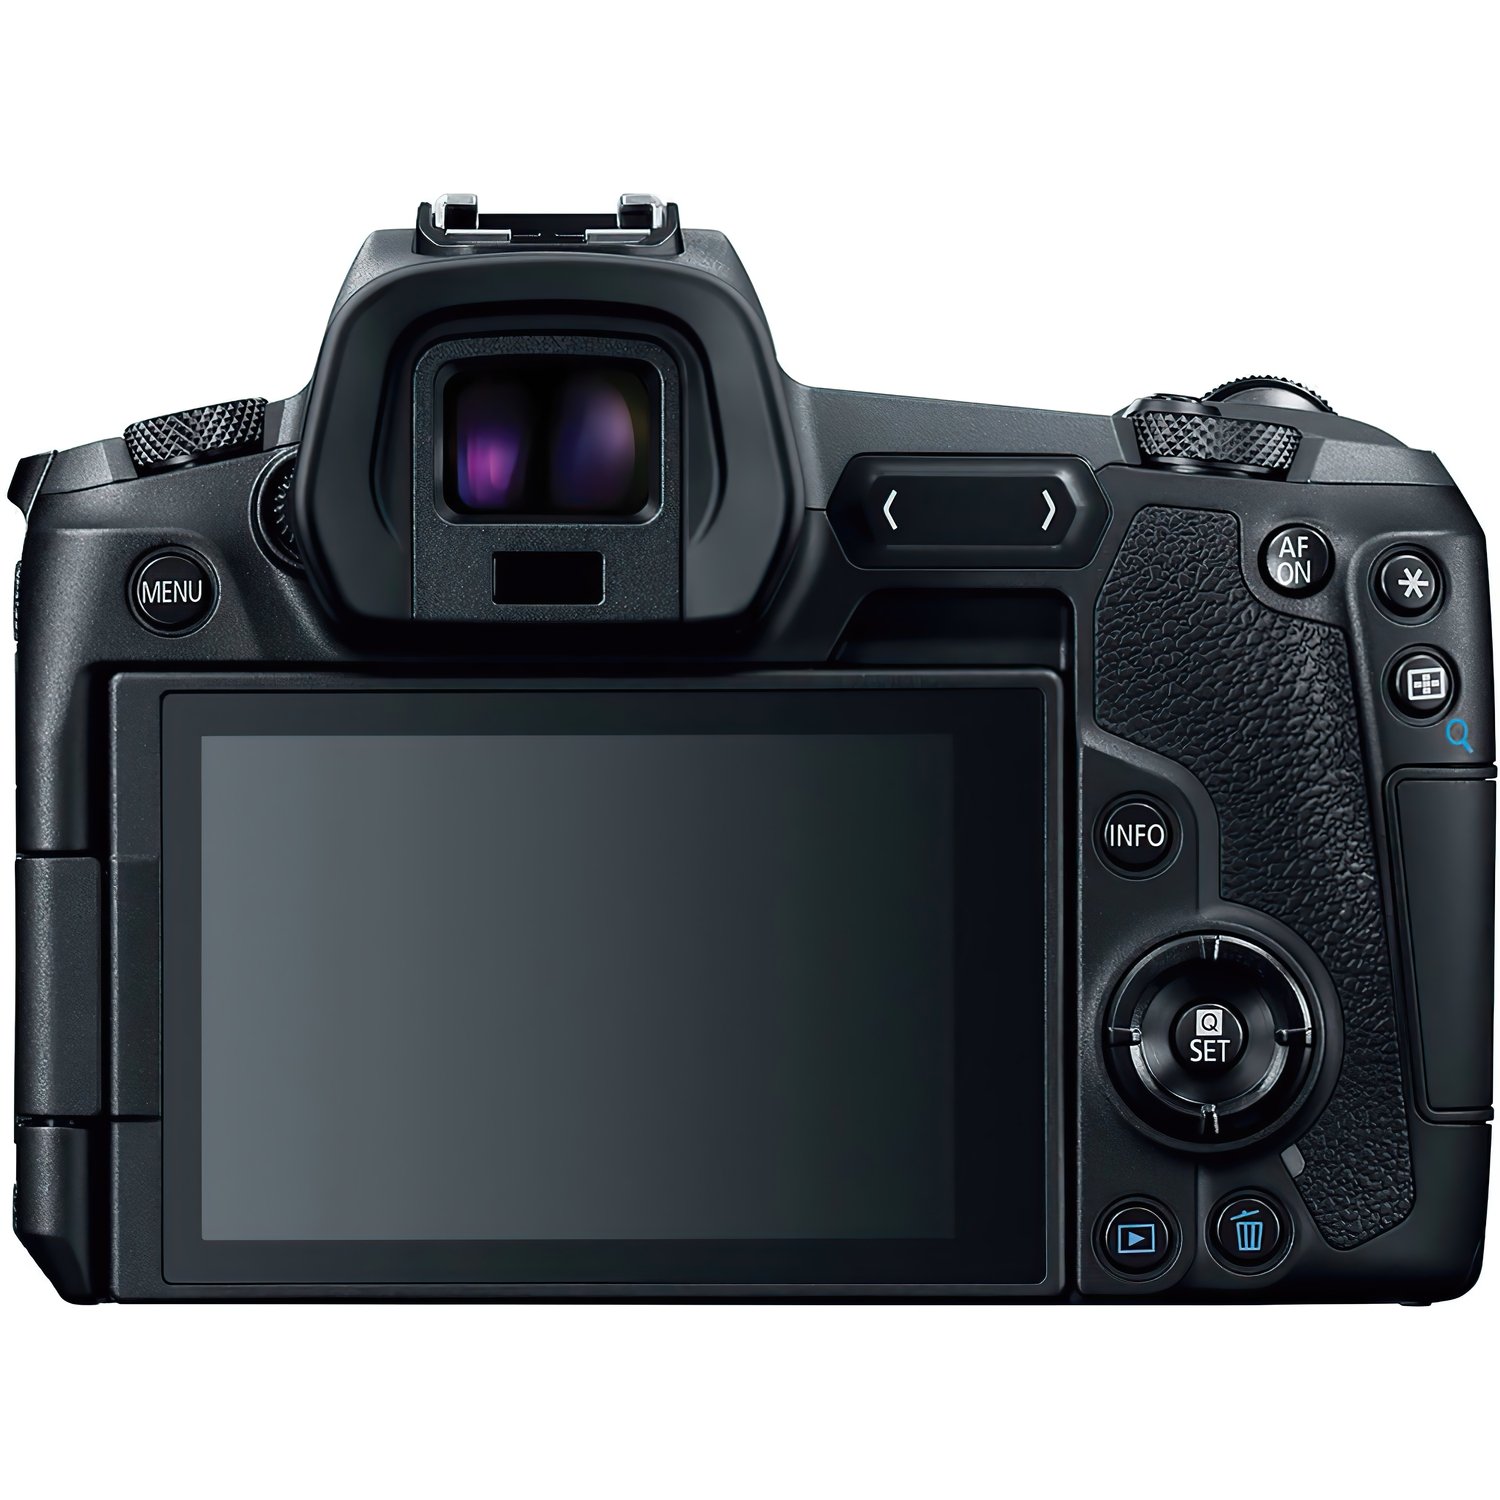 Фотоаппарат Canon EOS R Kit RF 24-105mm f/4-7.1 IS STM, черный